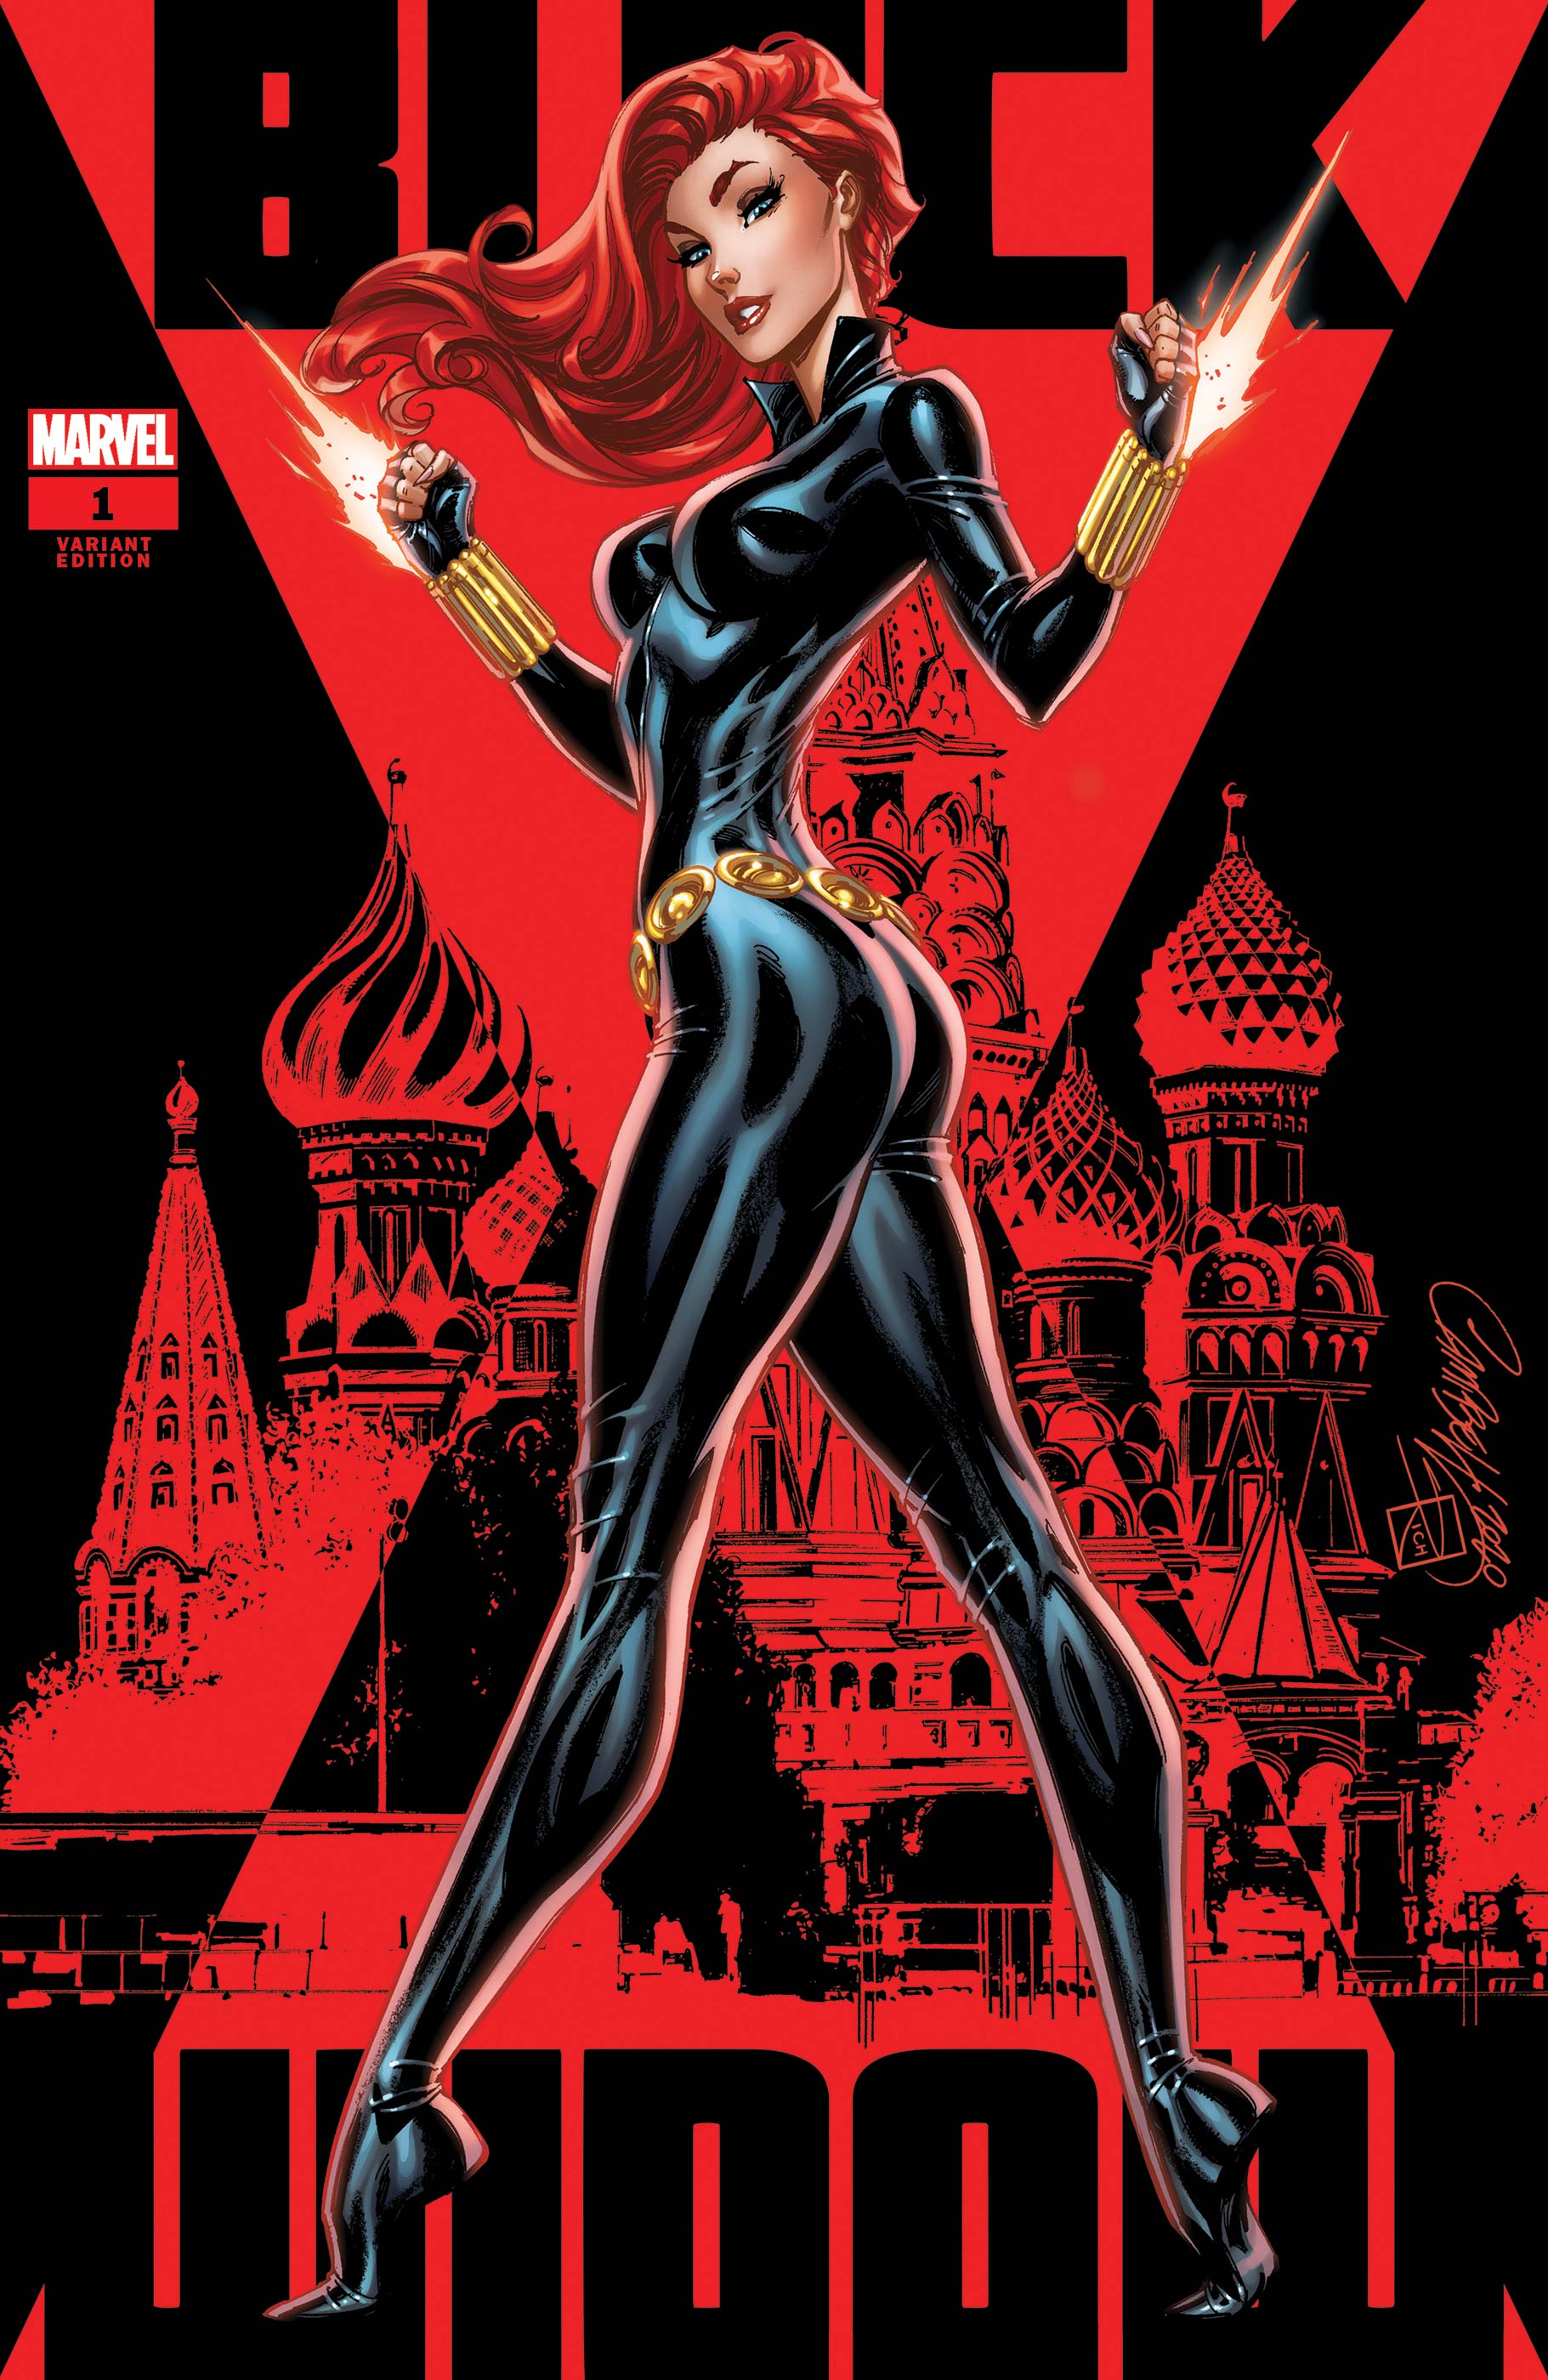 Black Widow (2020) #1 (Variant)